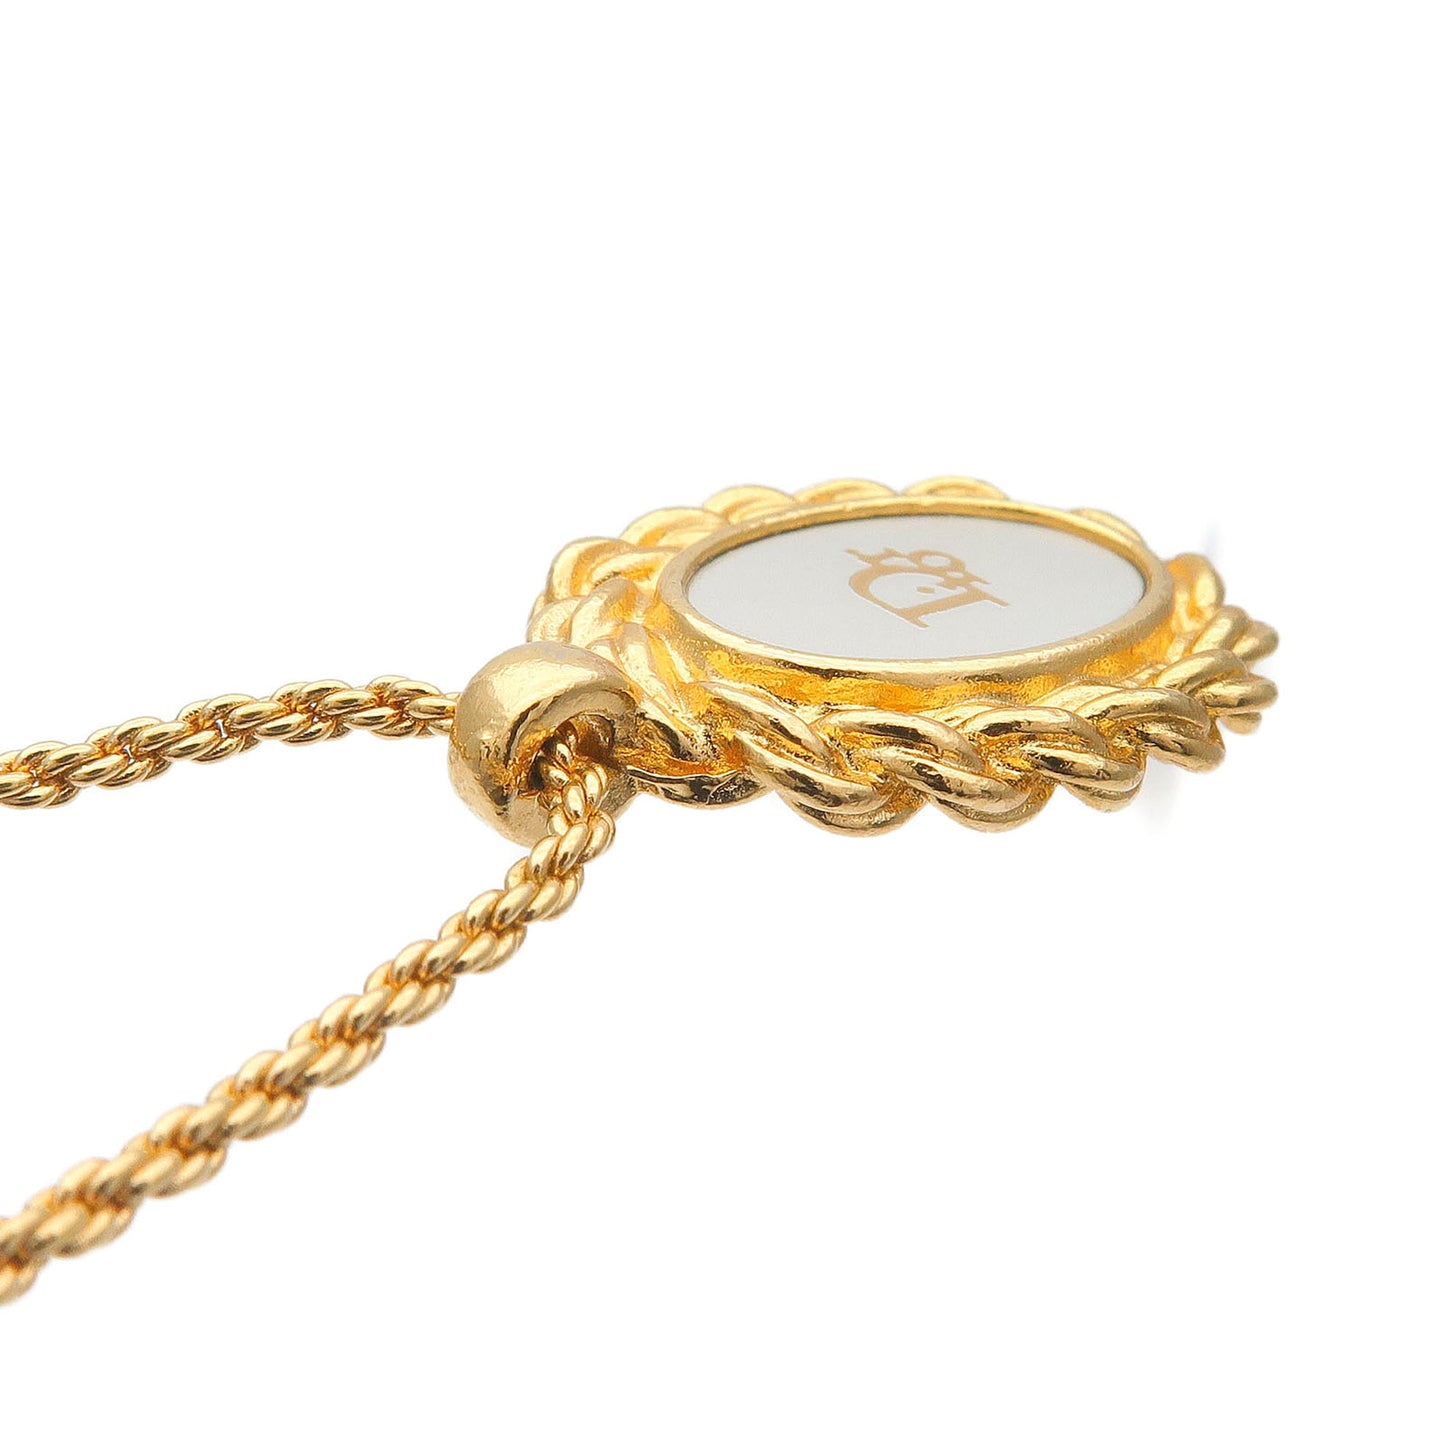 Christian Dior Oval Logo Necklace Pendant Gold Silver